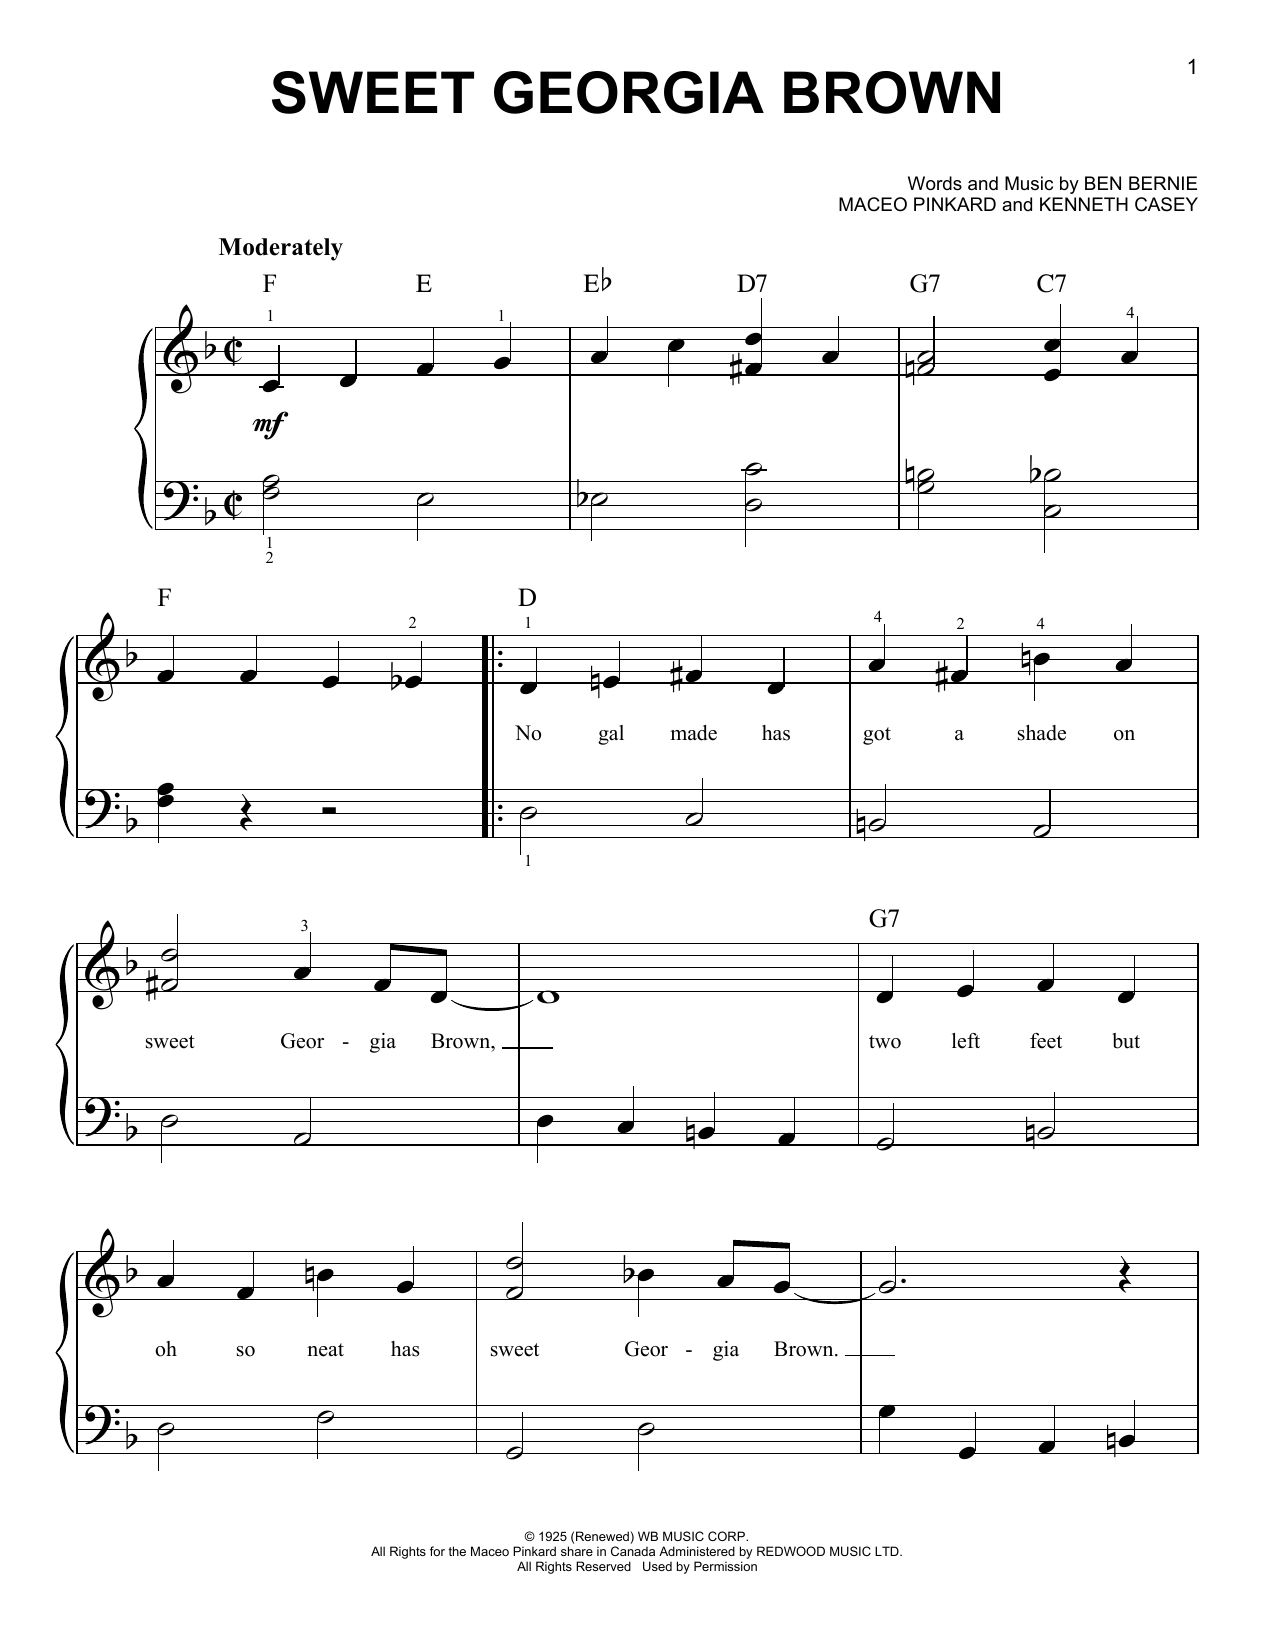 Count Basie Sweet Georgia Brown Sheet Music Notes & Chords for Banjo - Download or Print PDF